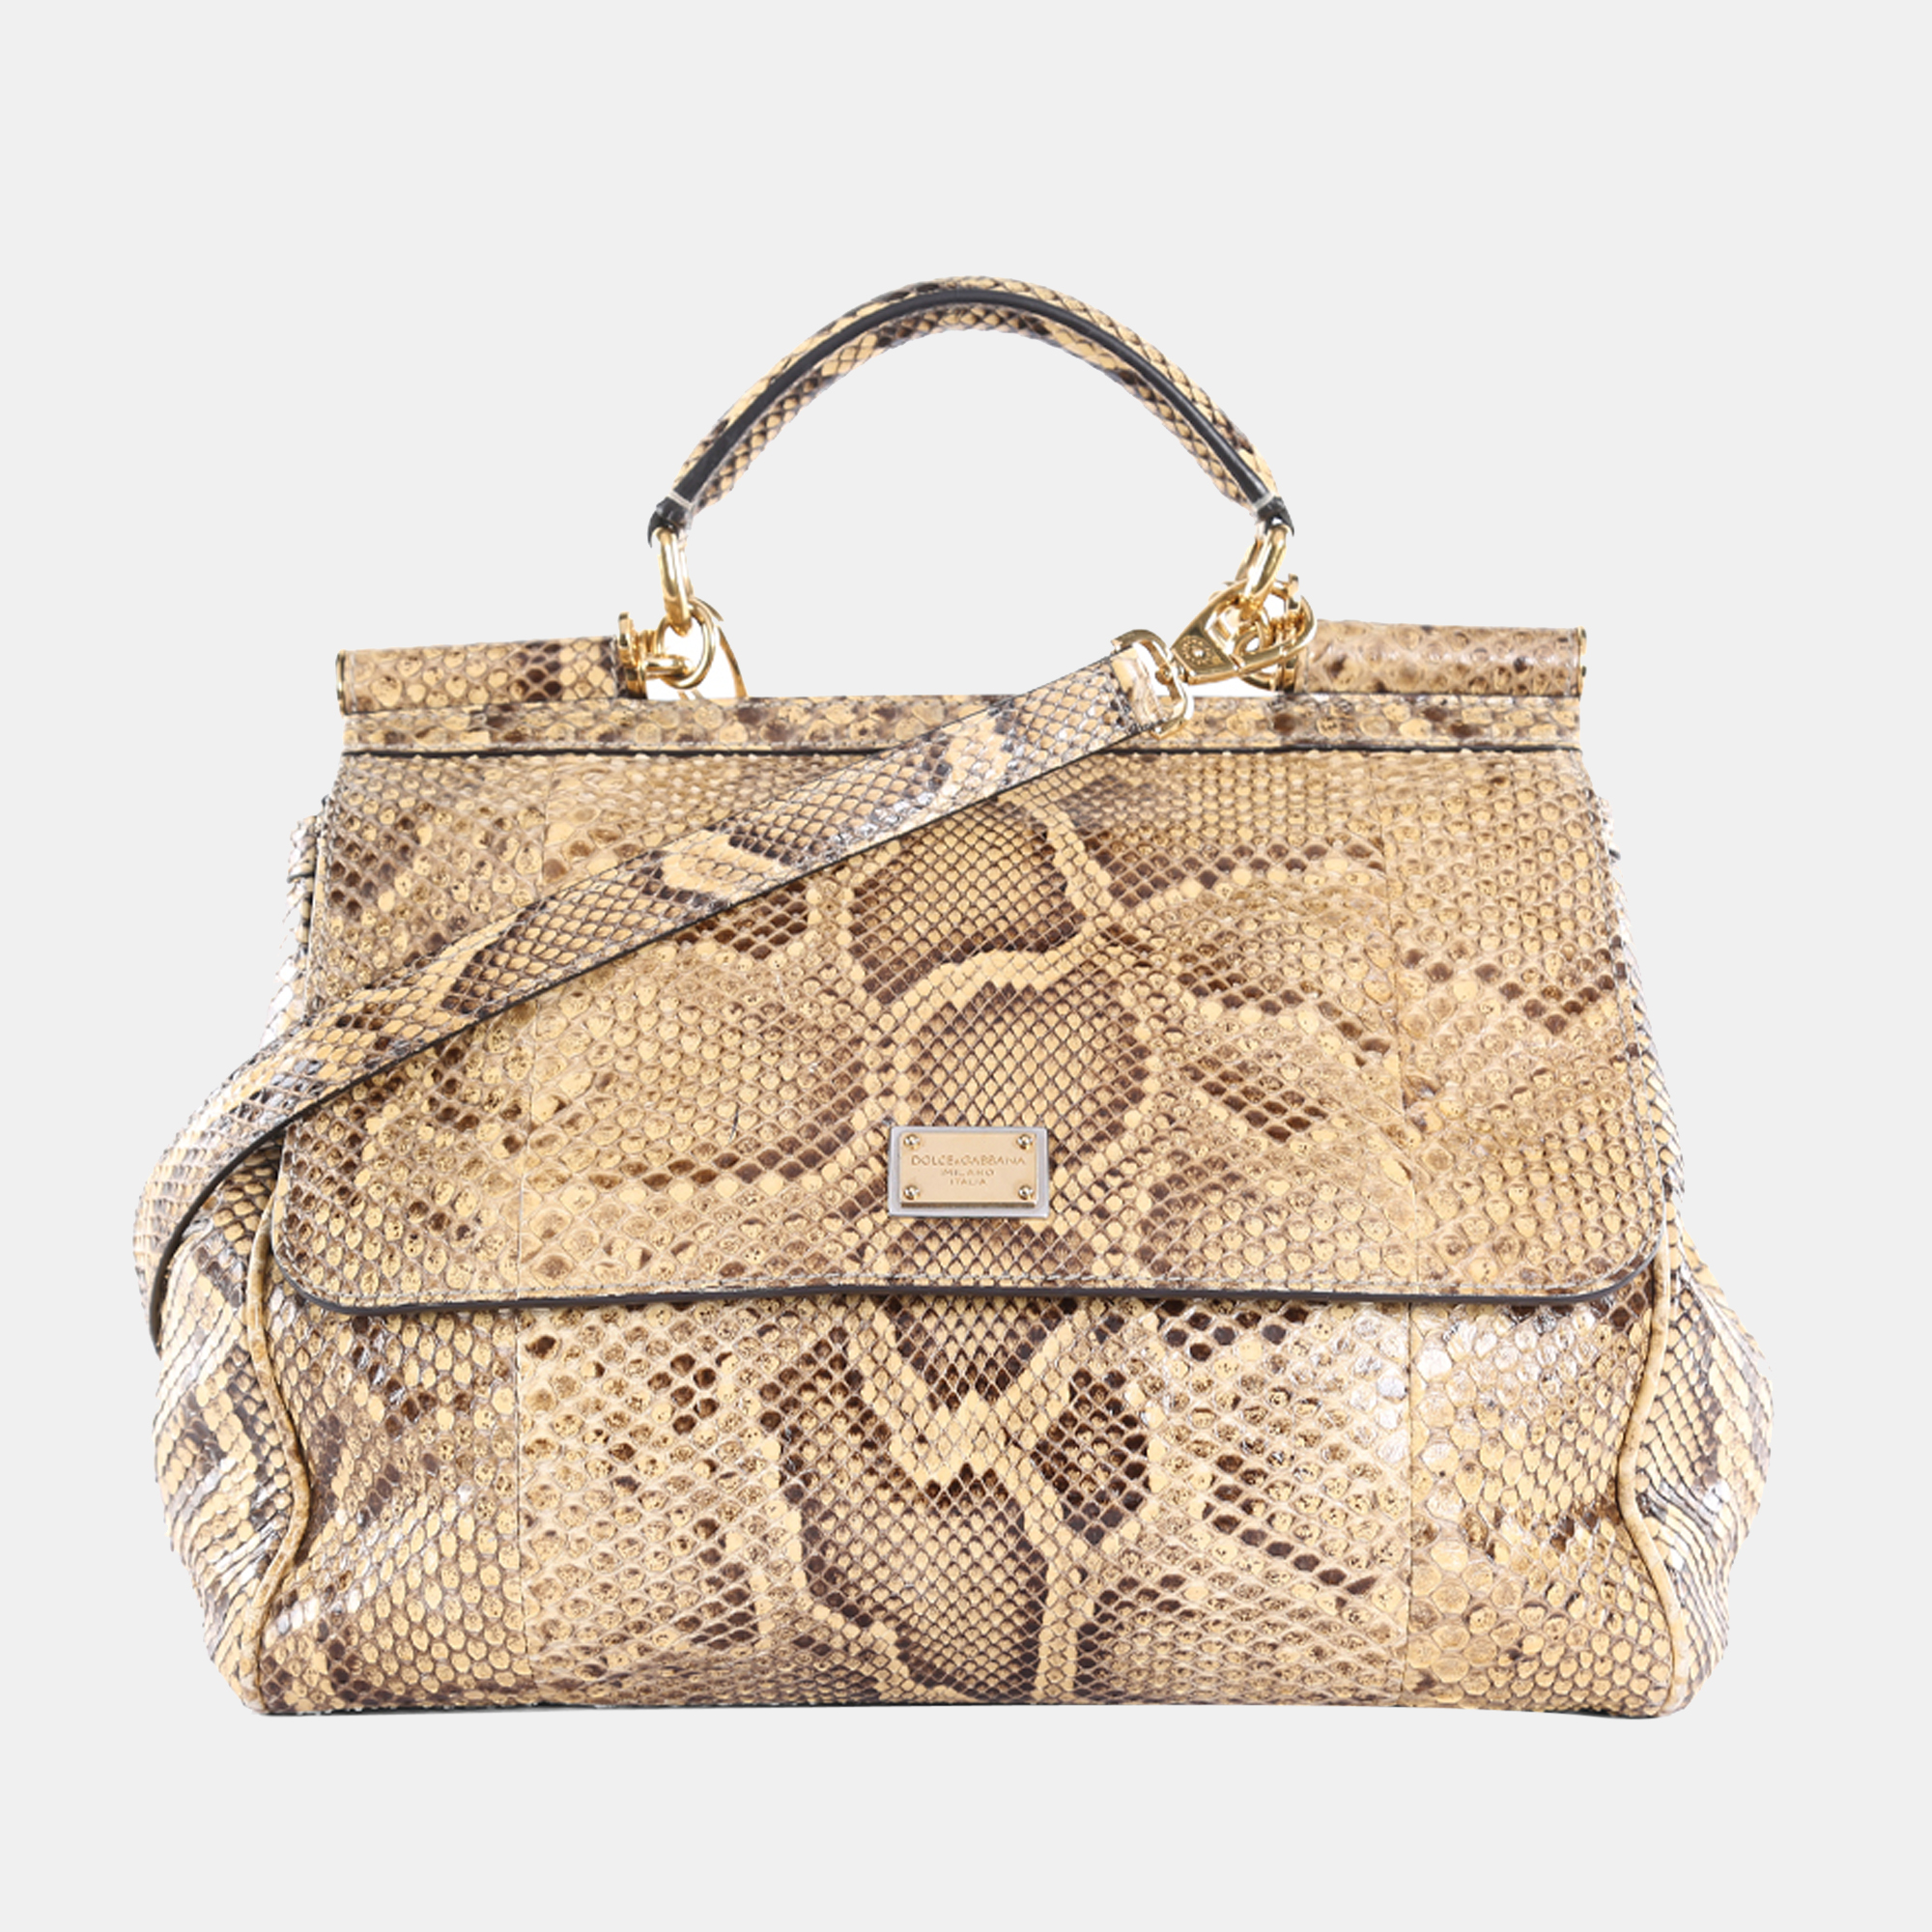 Dolce & Gabbana Beige & Brown Python Miss Sicily Bag With Shoulder Strap